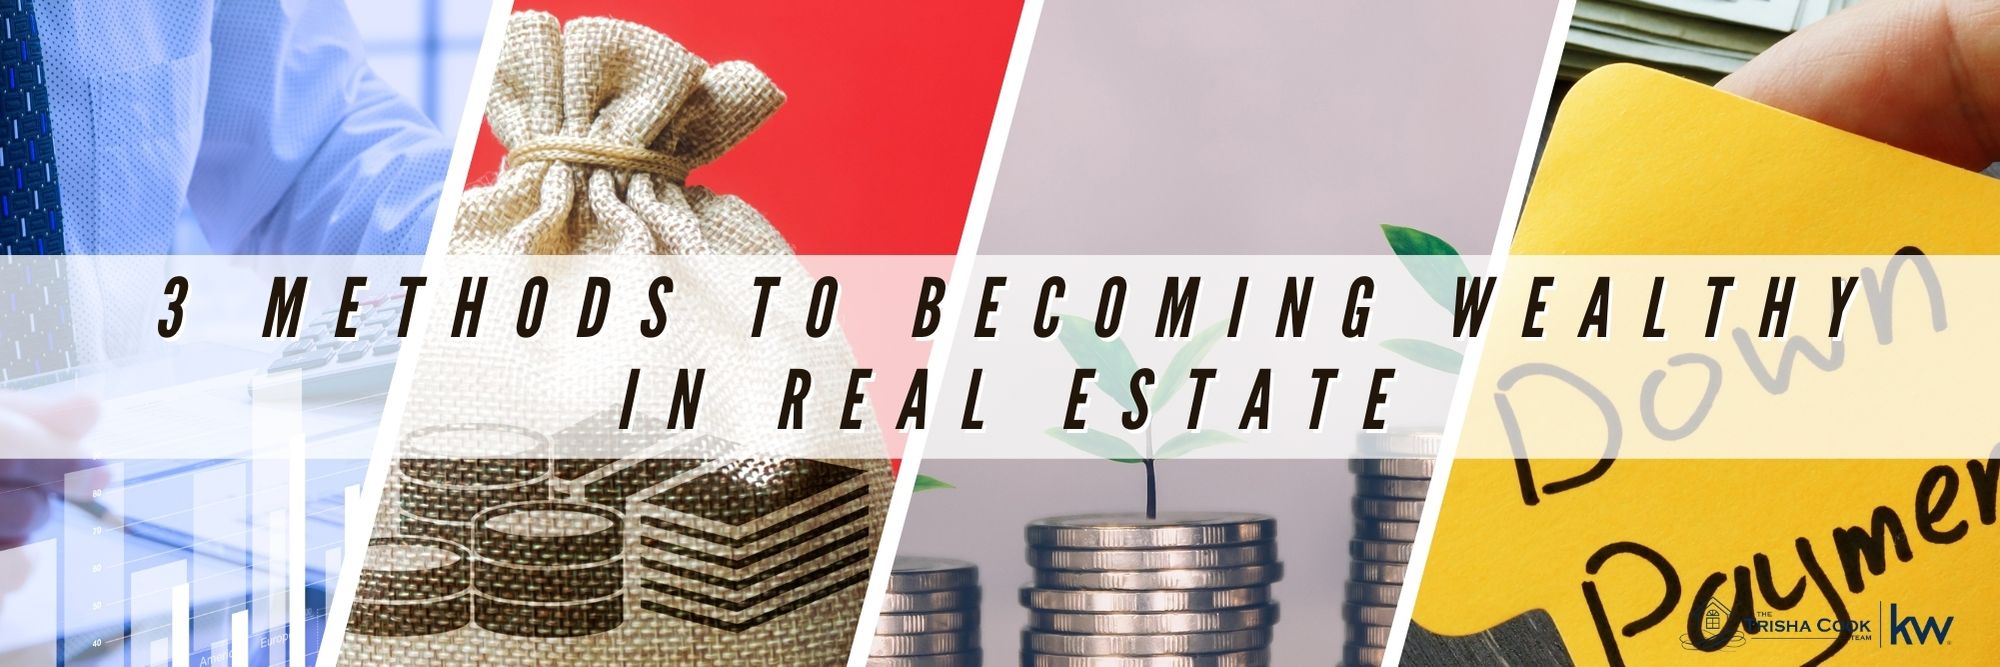 3 methods to becoming wealthy in real estate.jpg